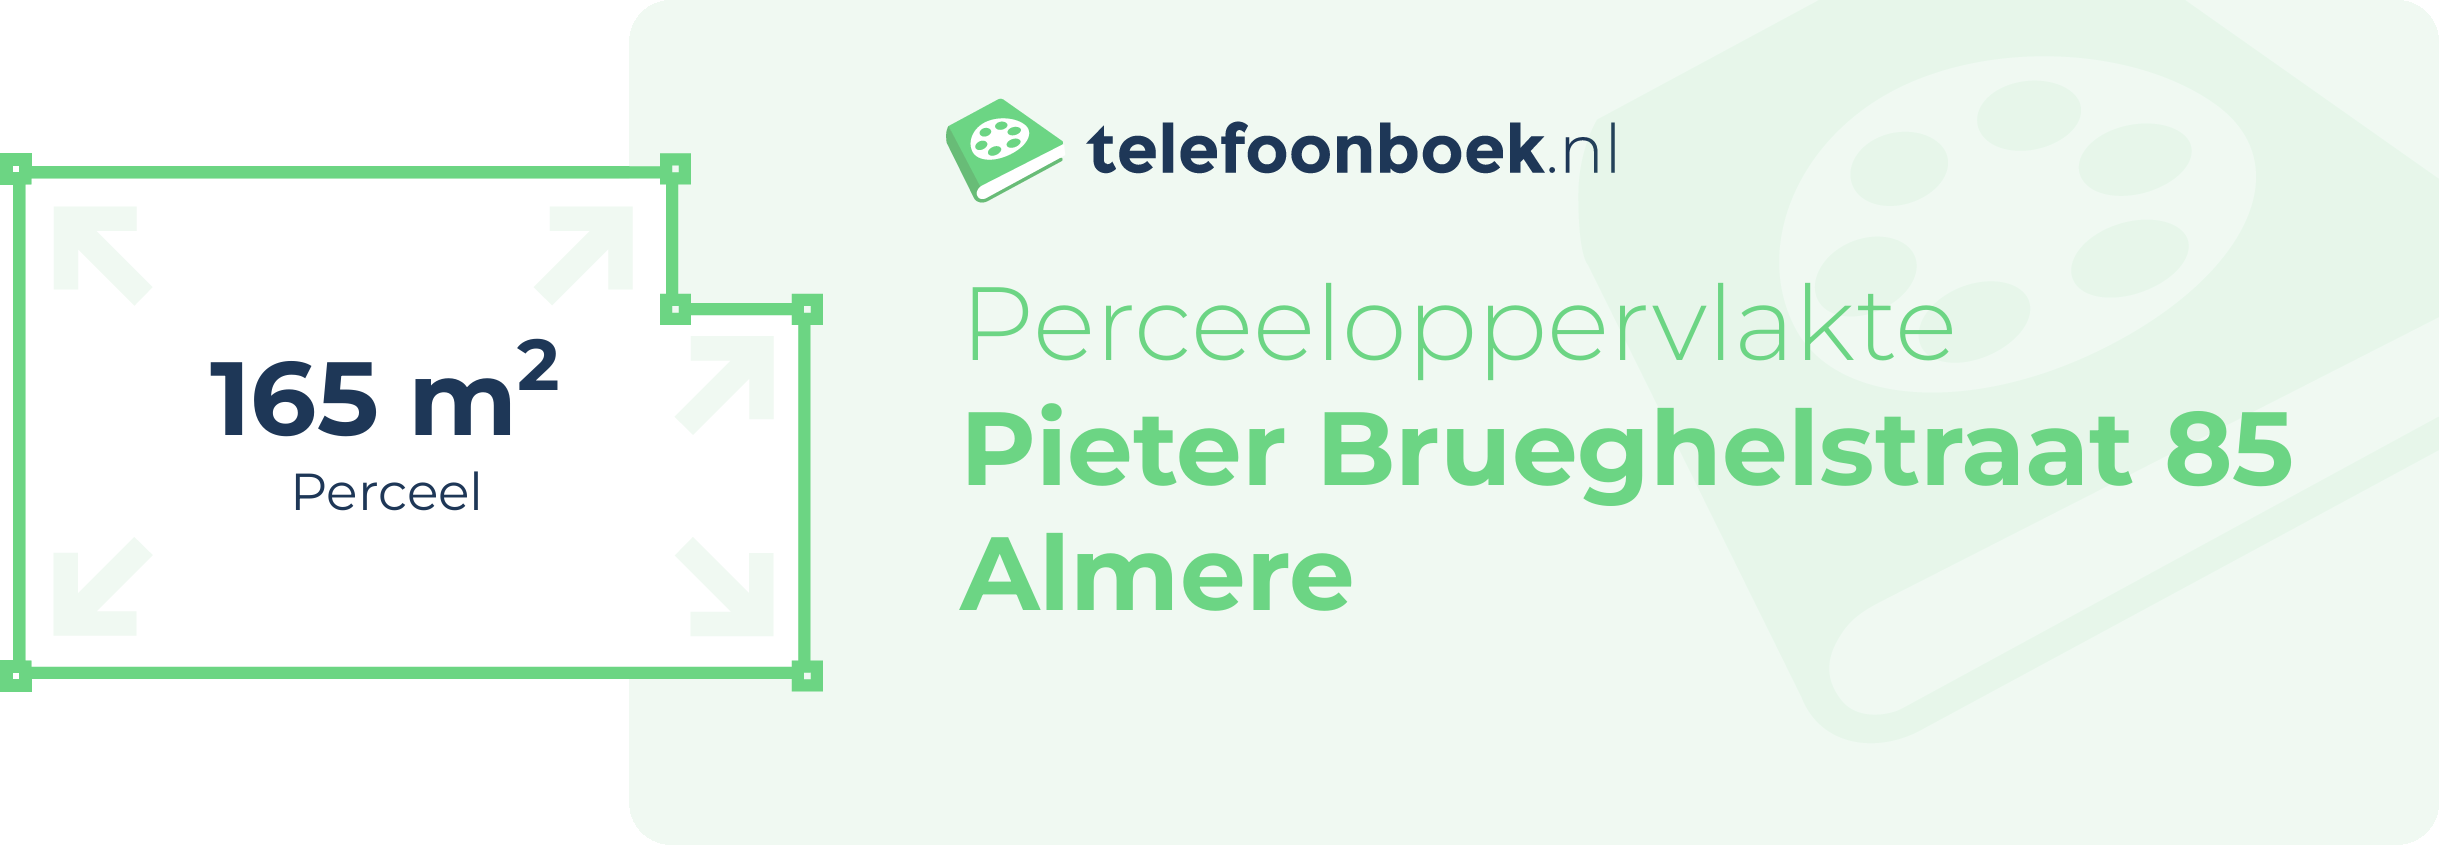 Perceeloppervlakte Pieter Brueghelstraat 85 Almere